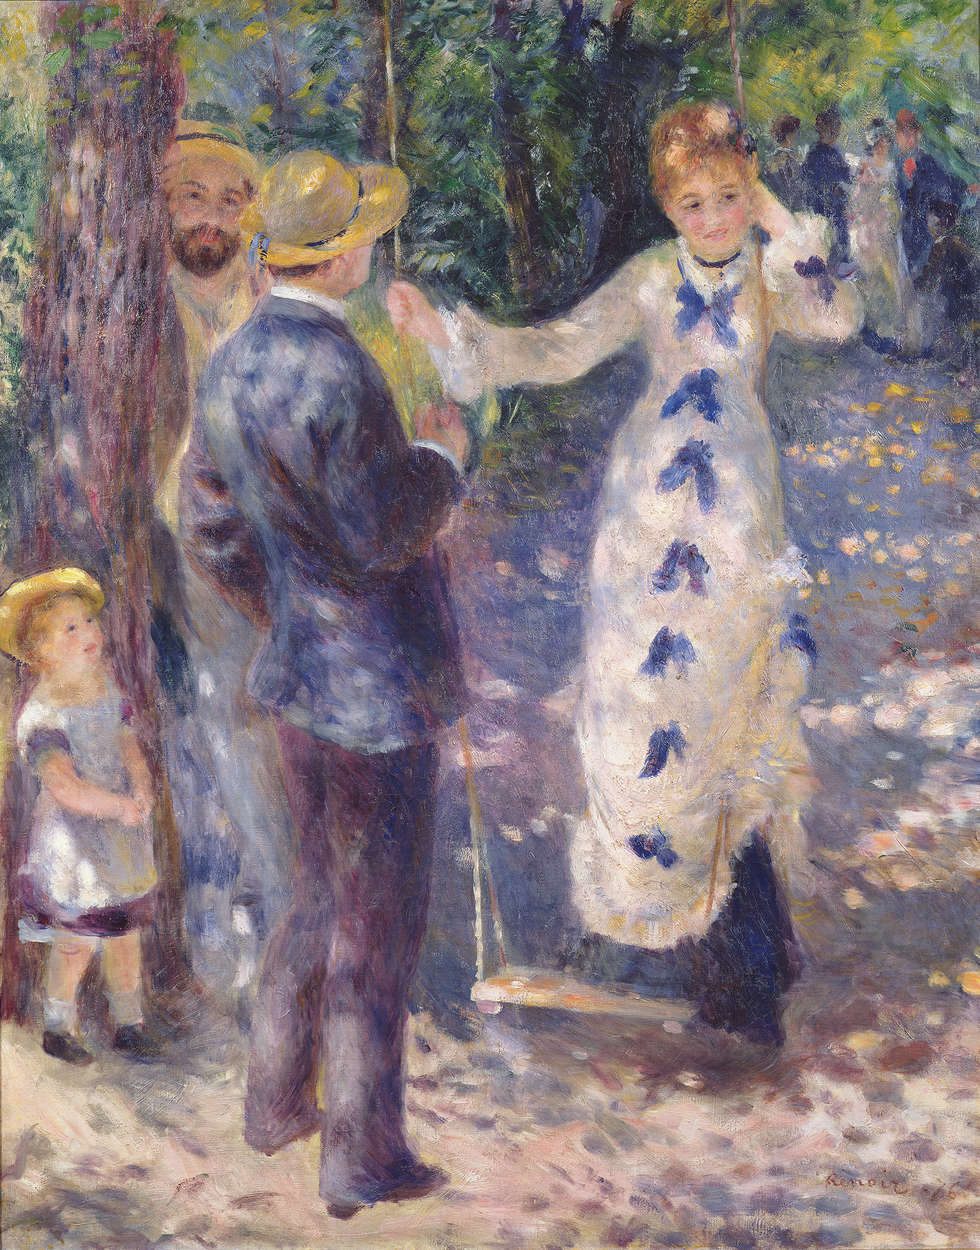             Photo wallpaper "On the swing" by Pierre Auguste Renoir
        